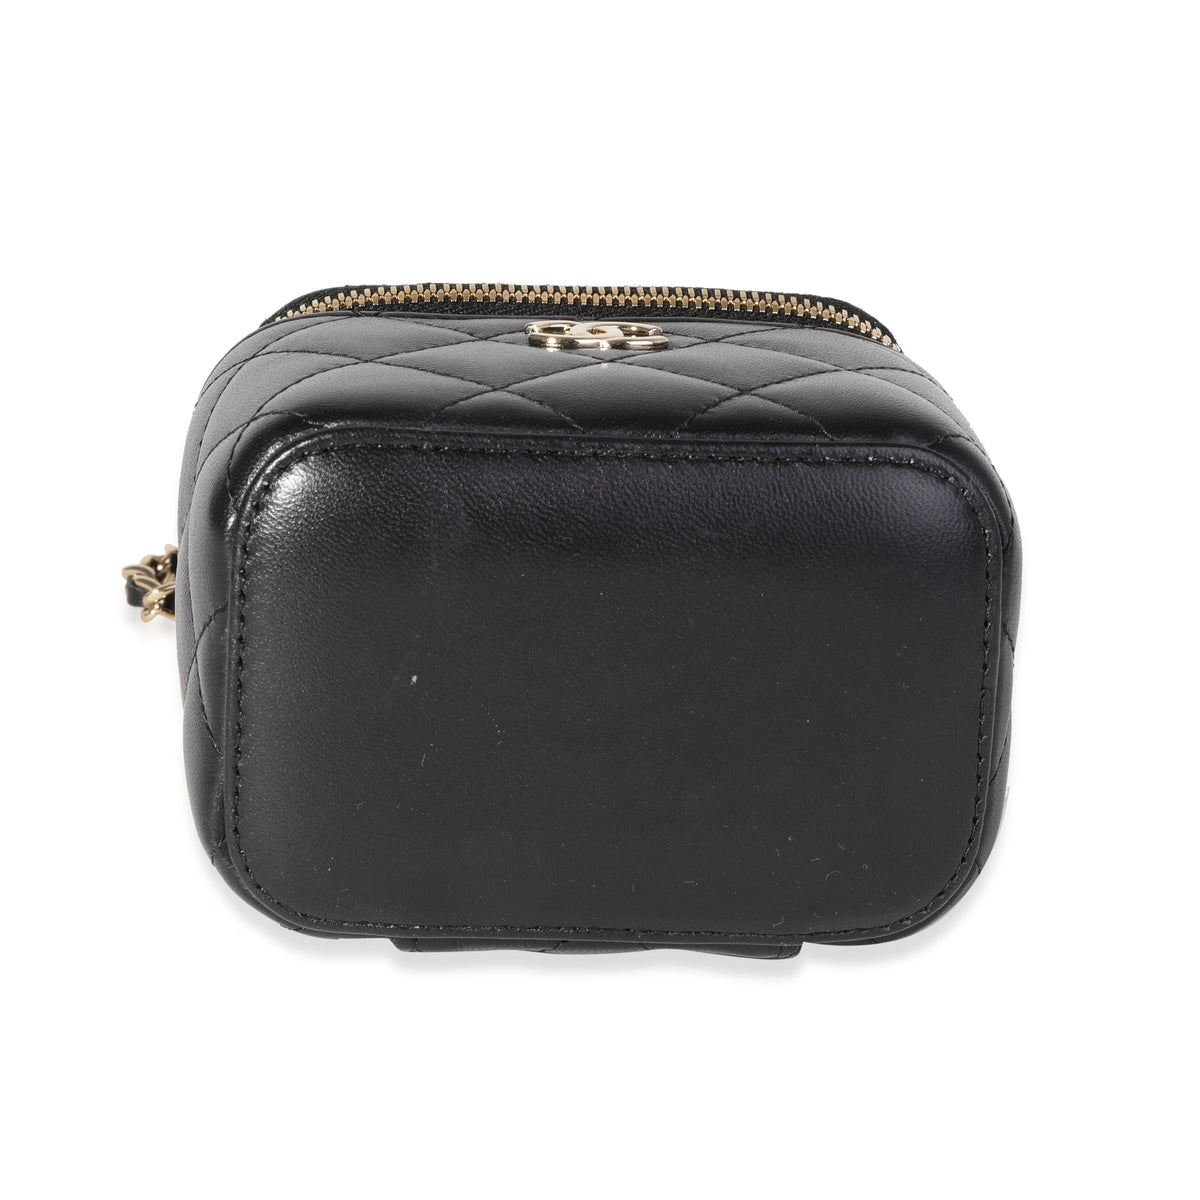 Chanel 2021 Small Vanity w/Chain - Metallic Mini Bags, Handbags - CHA952411